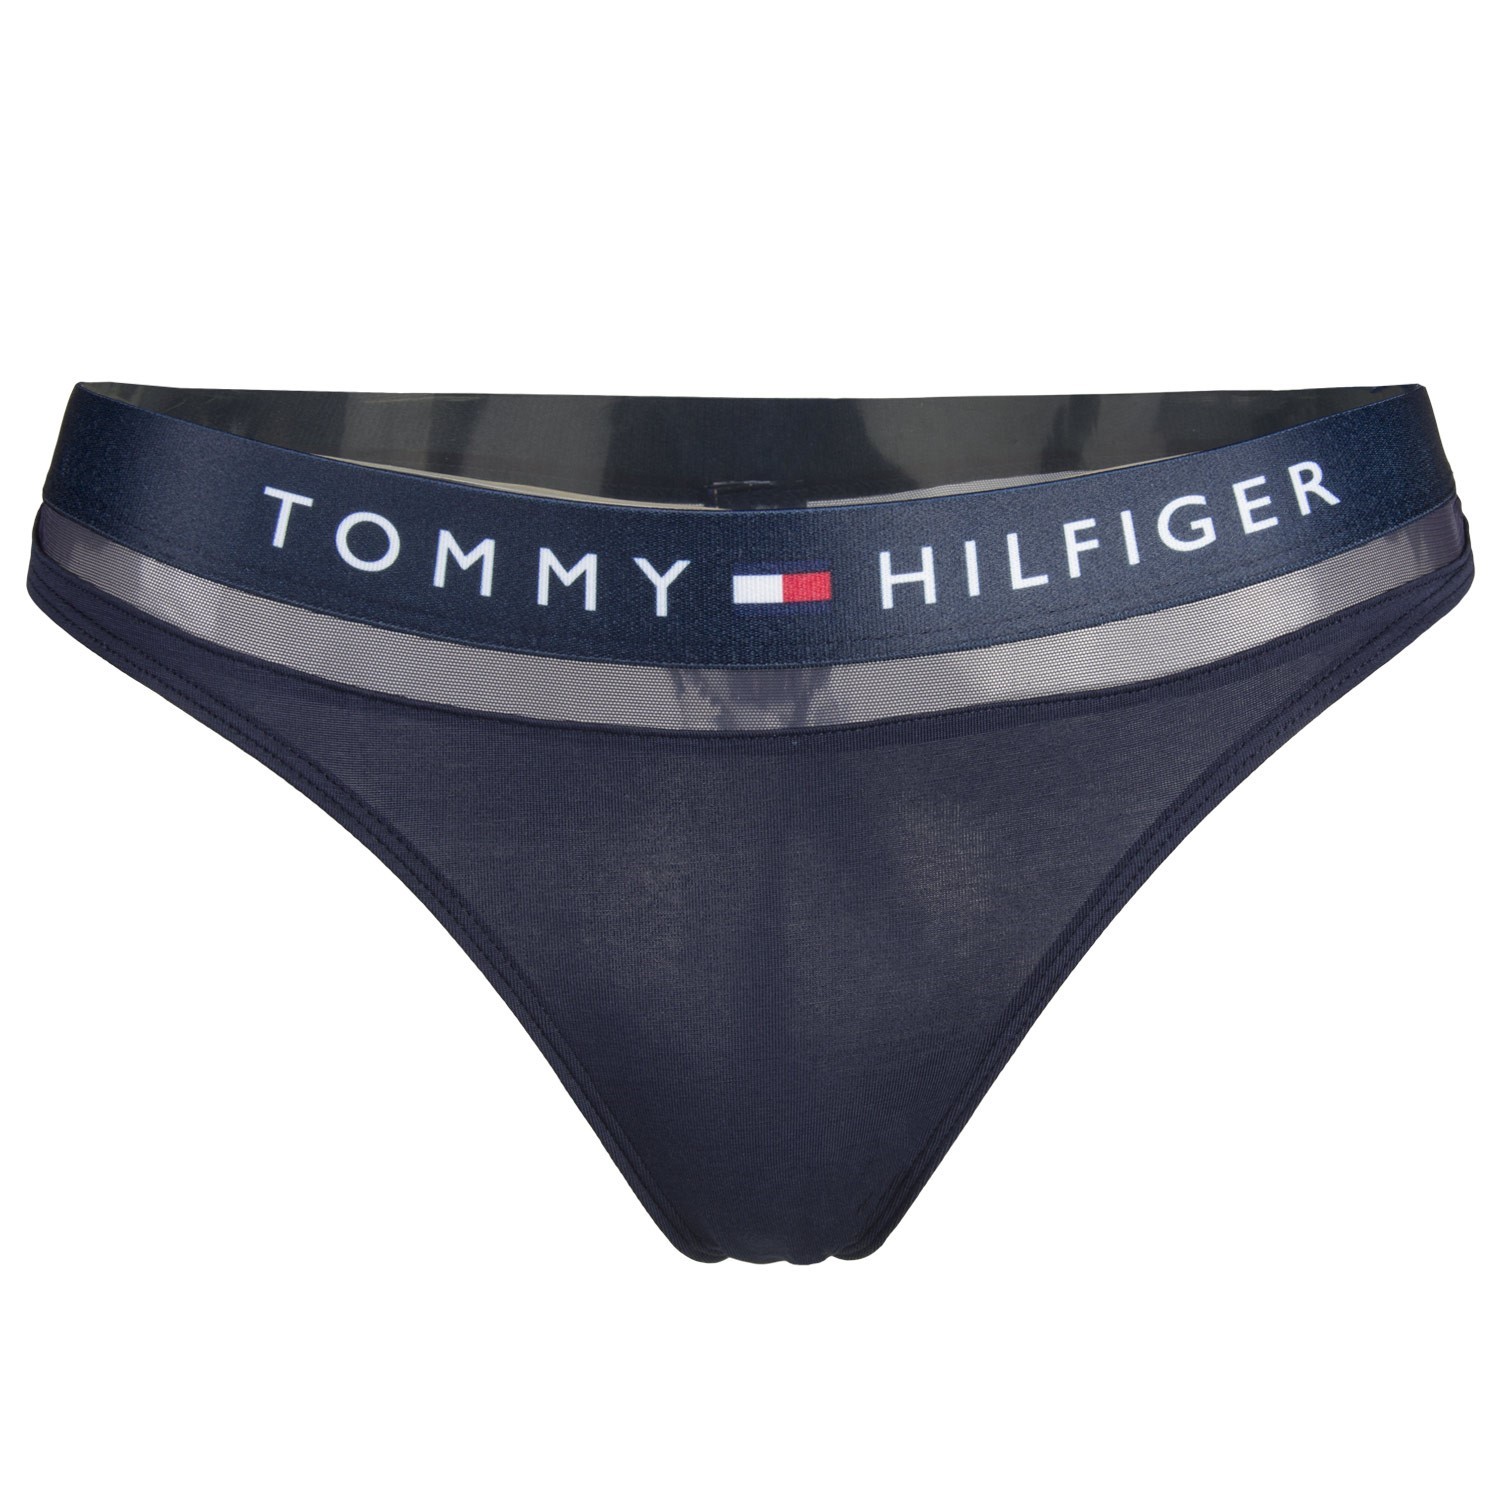 Tommy Hilfiger Thong - Thong - Briefs - Underwear - Timarco.co.uk